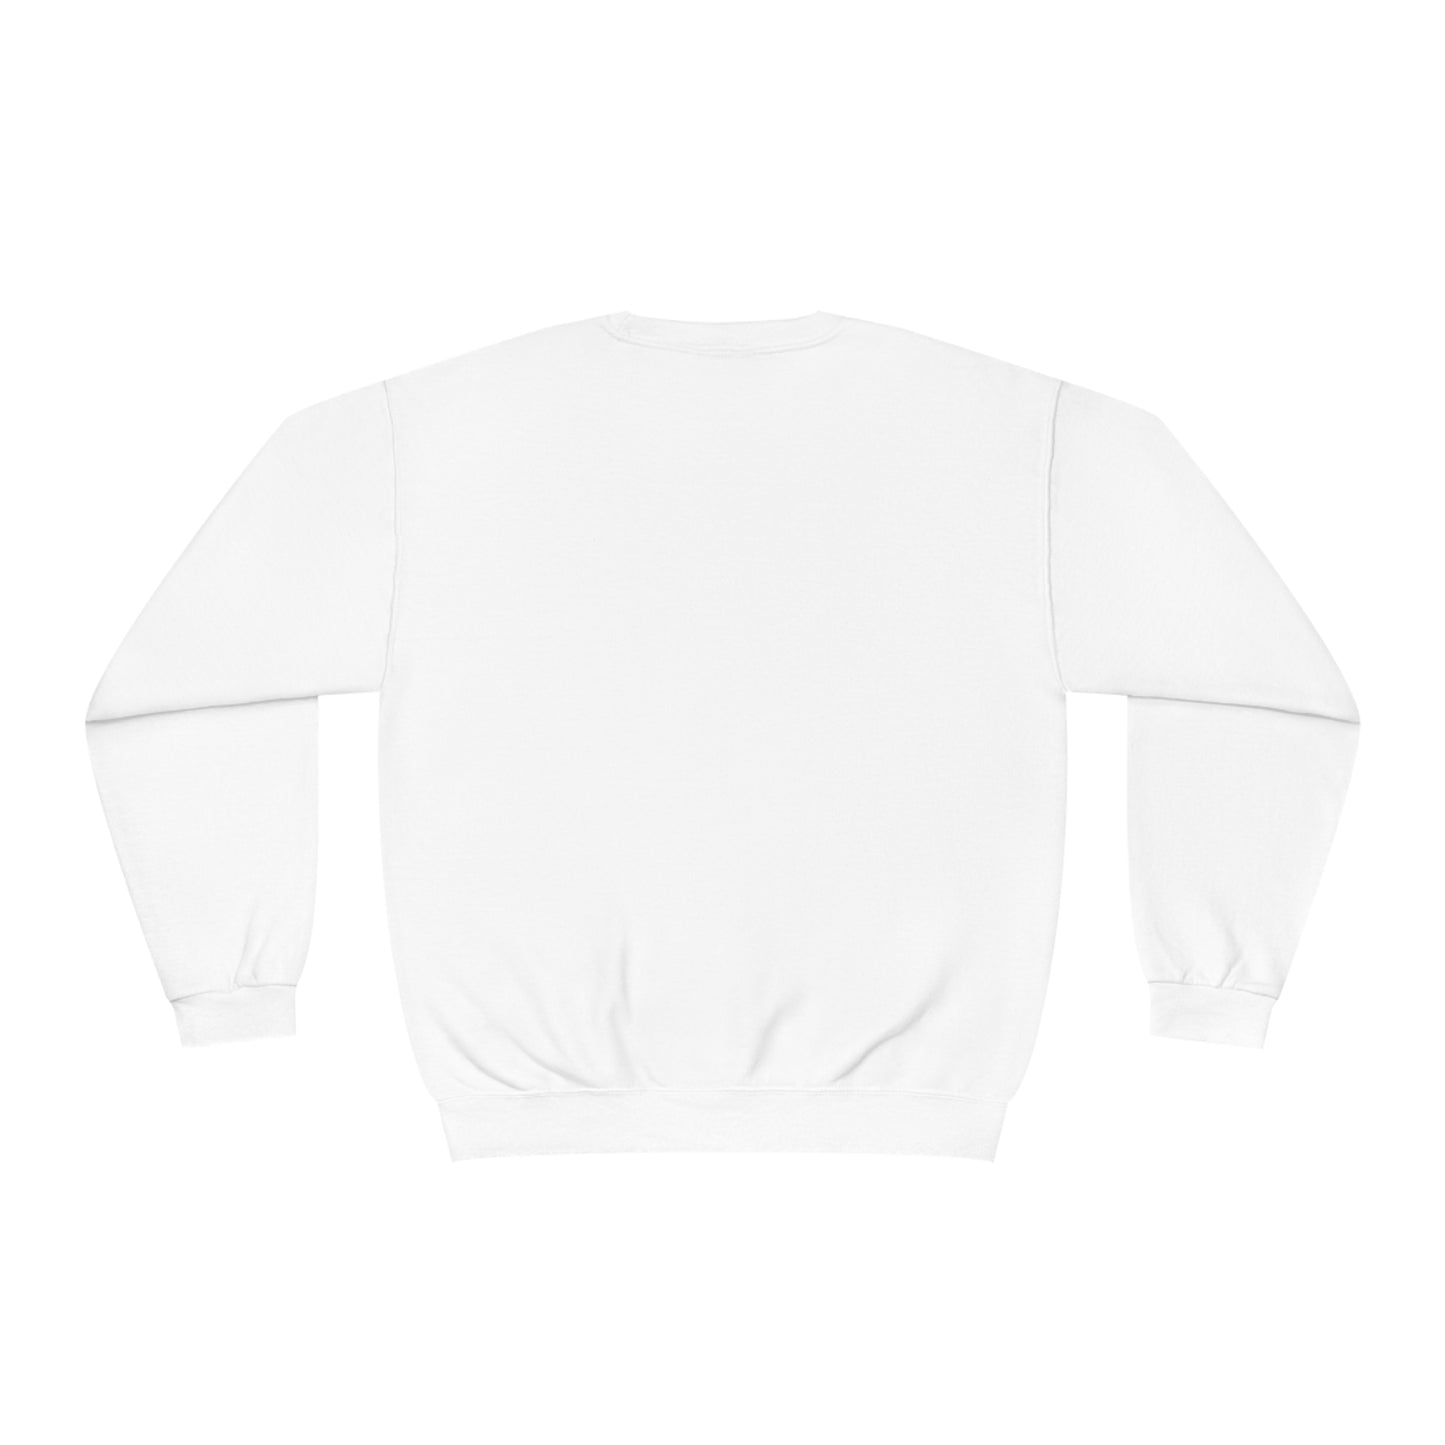 Regal - Sweatshirt